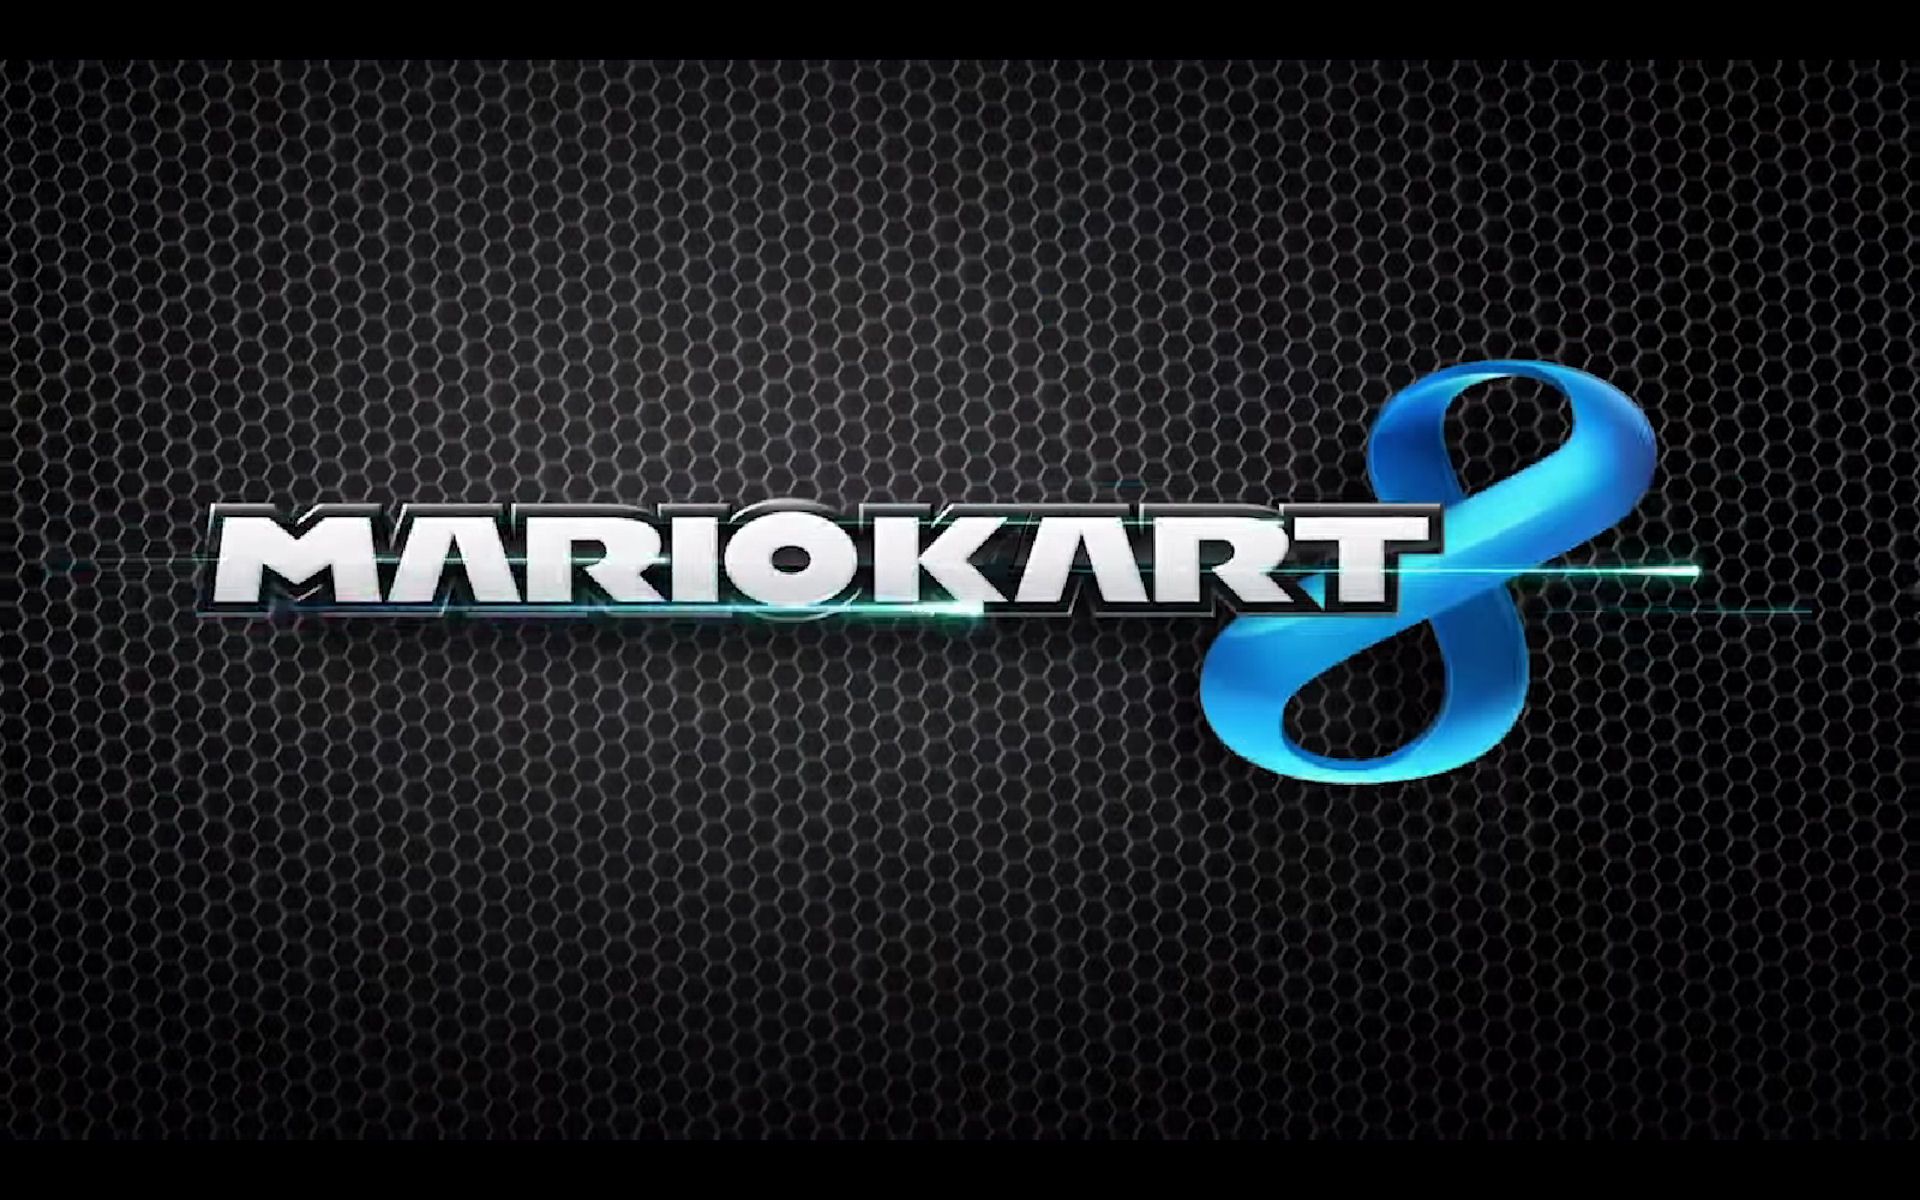 mario-kart-8-logo-wallpaper.jpg